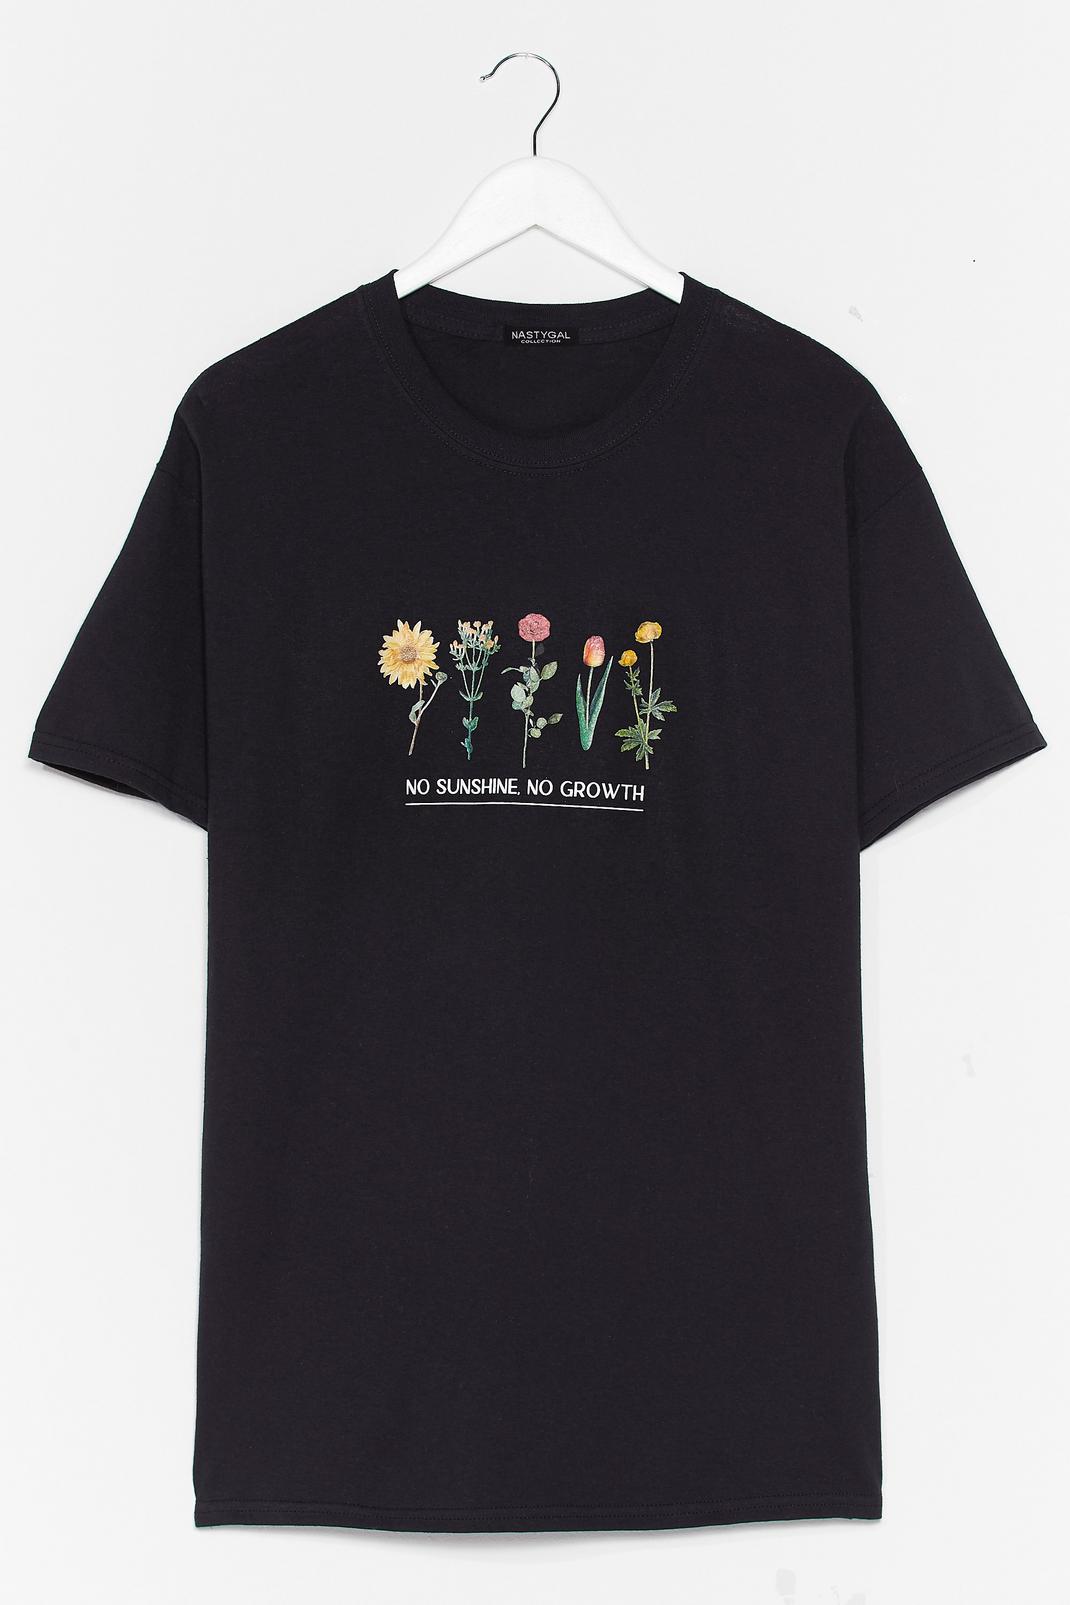 Grande Taille - T-shirt ample à impressions fleuries, Black image number 1